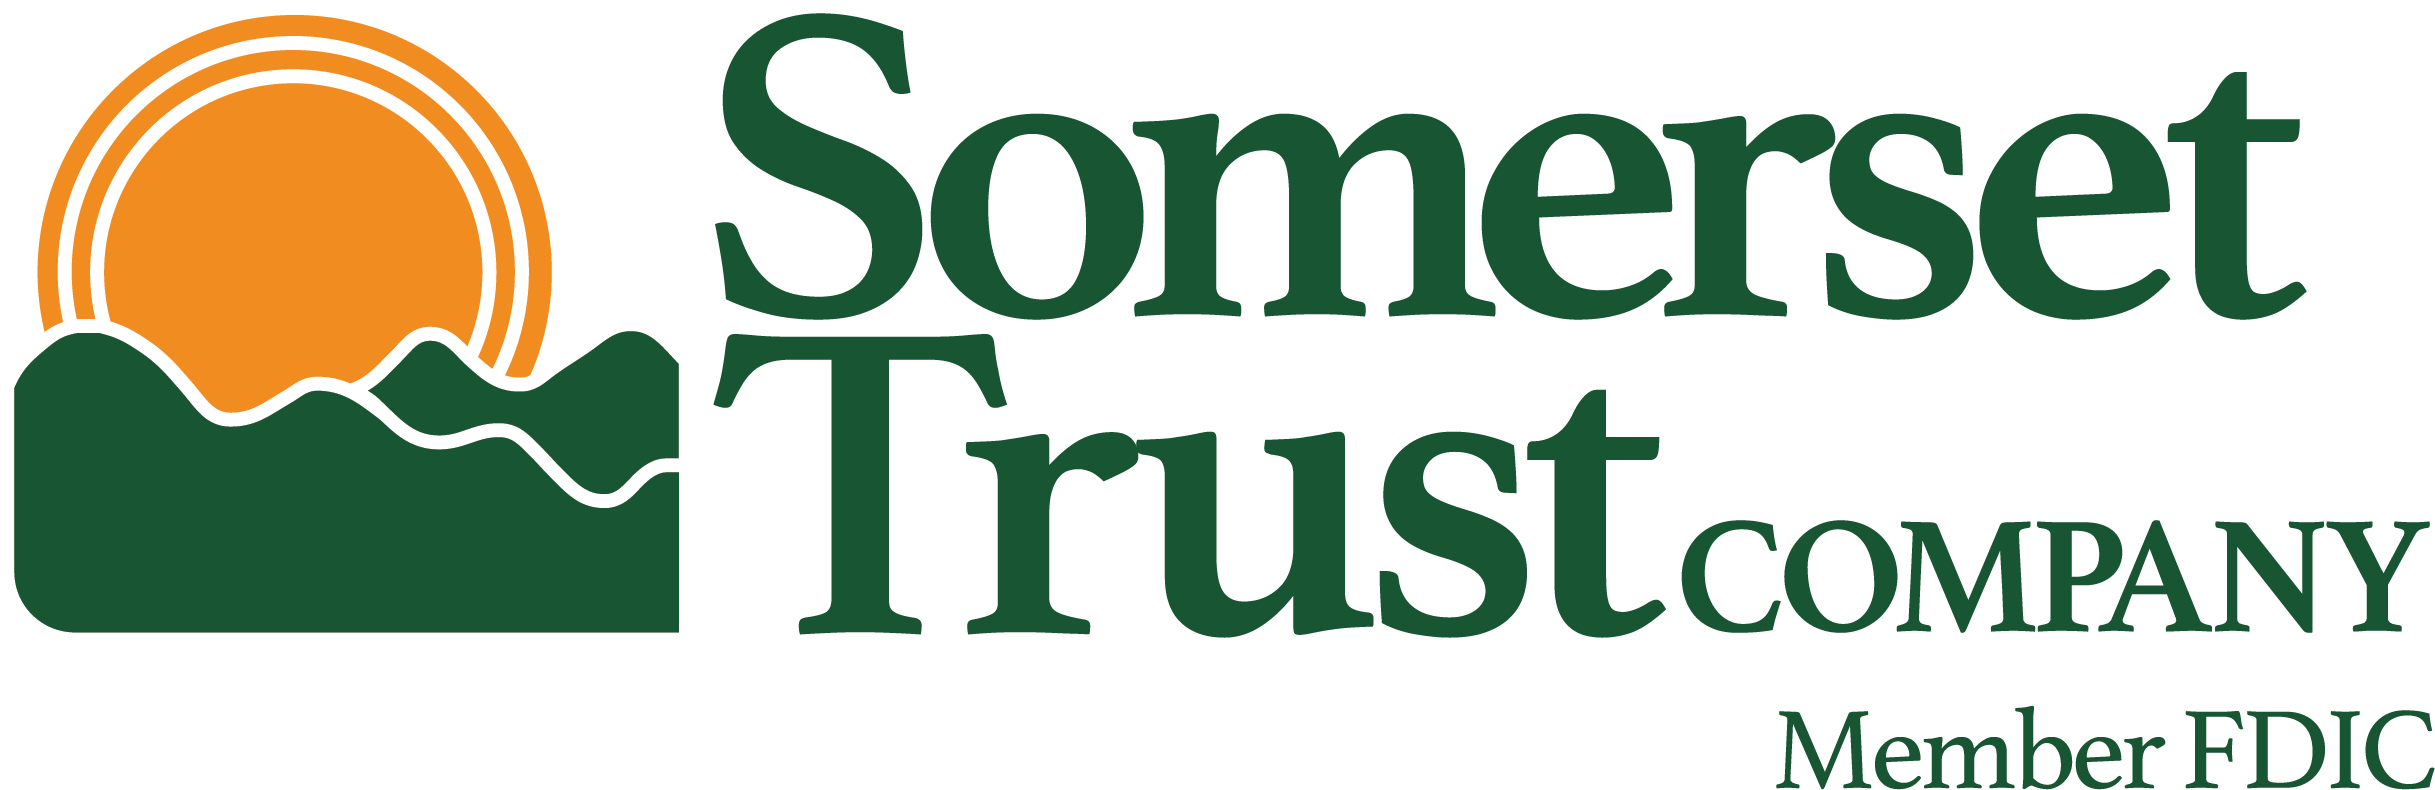 Somerset Trust logo